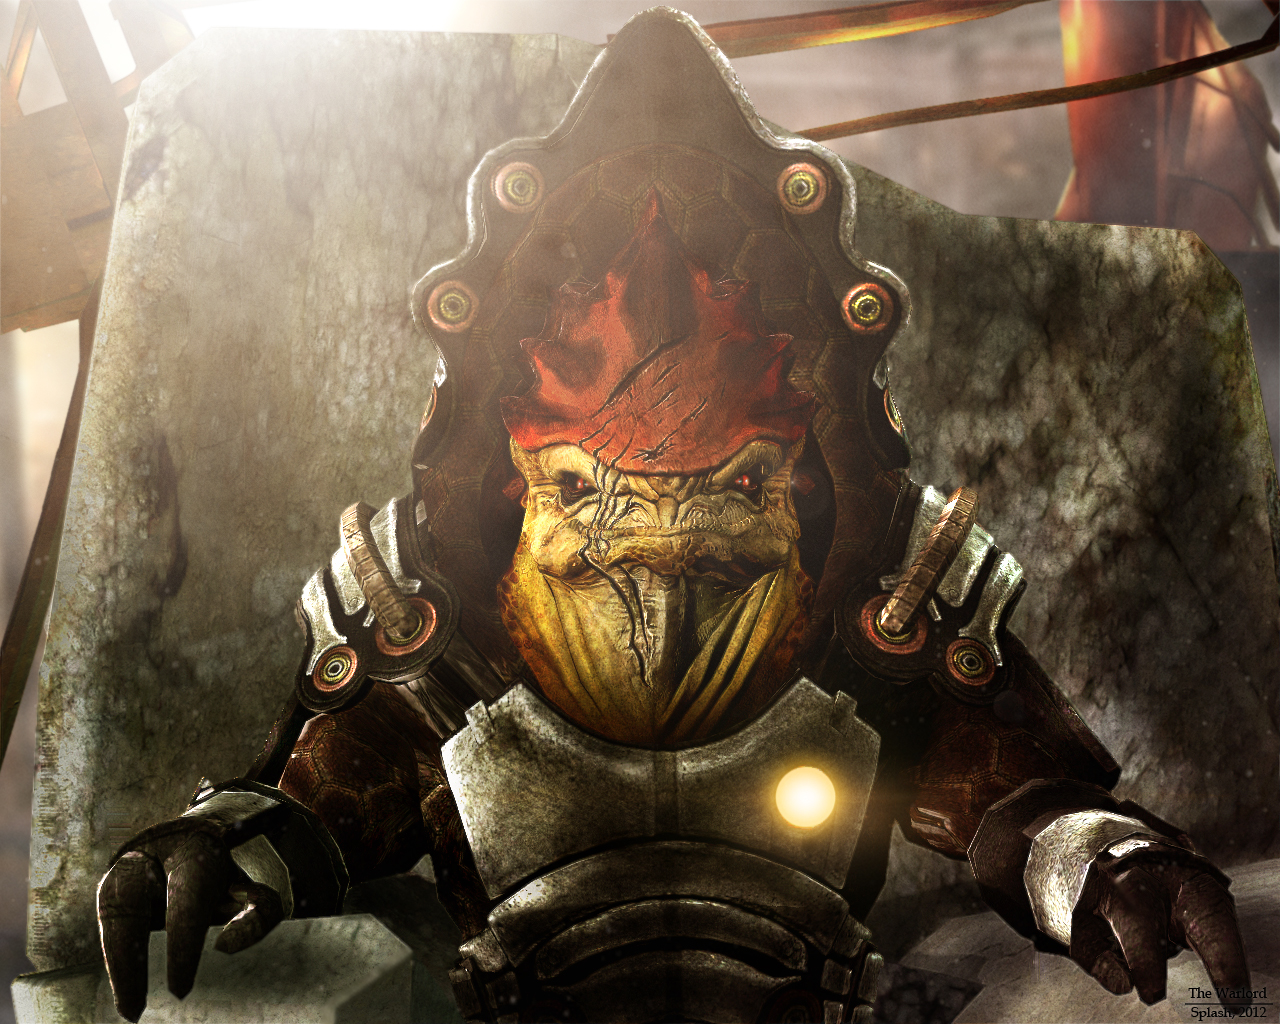 Krogan Empire | Mass Effect Fanon Wiki | Fandom